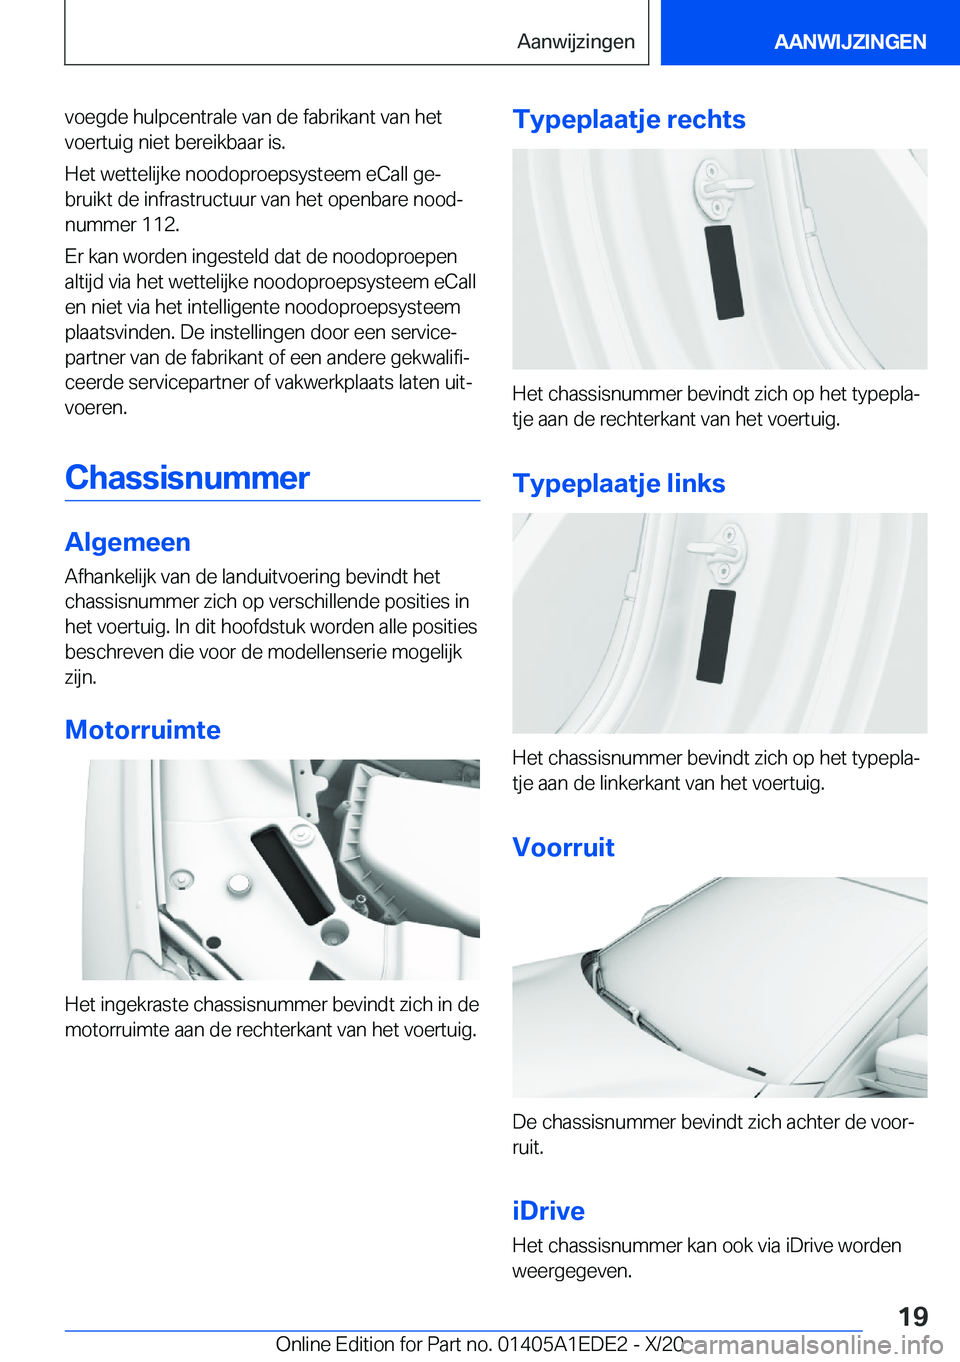 BMW 8 SERIES CONVERTIBLE 2021  Instructieboekjes (in Dutch) �v�o�e�g�d�e��h�u�l�p�c�e�n�t�r�a�l�e��v�a�n��d�e��f�a�b�r�i�k�a�n�t��v�a�n��h�e�t
�v�o�e�r�t�u�i�g��n�i�e�t��b�e�r�e�i�k�b�a�a�r��i�s�.
�H�e�t��w�e�t�t�e�l�i�j�k�e��n�o�o�d�o�p�r�o�e�p�s�y